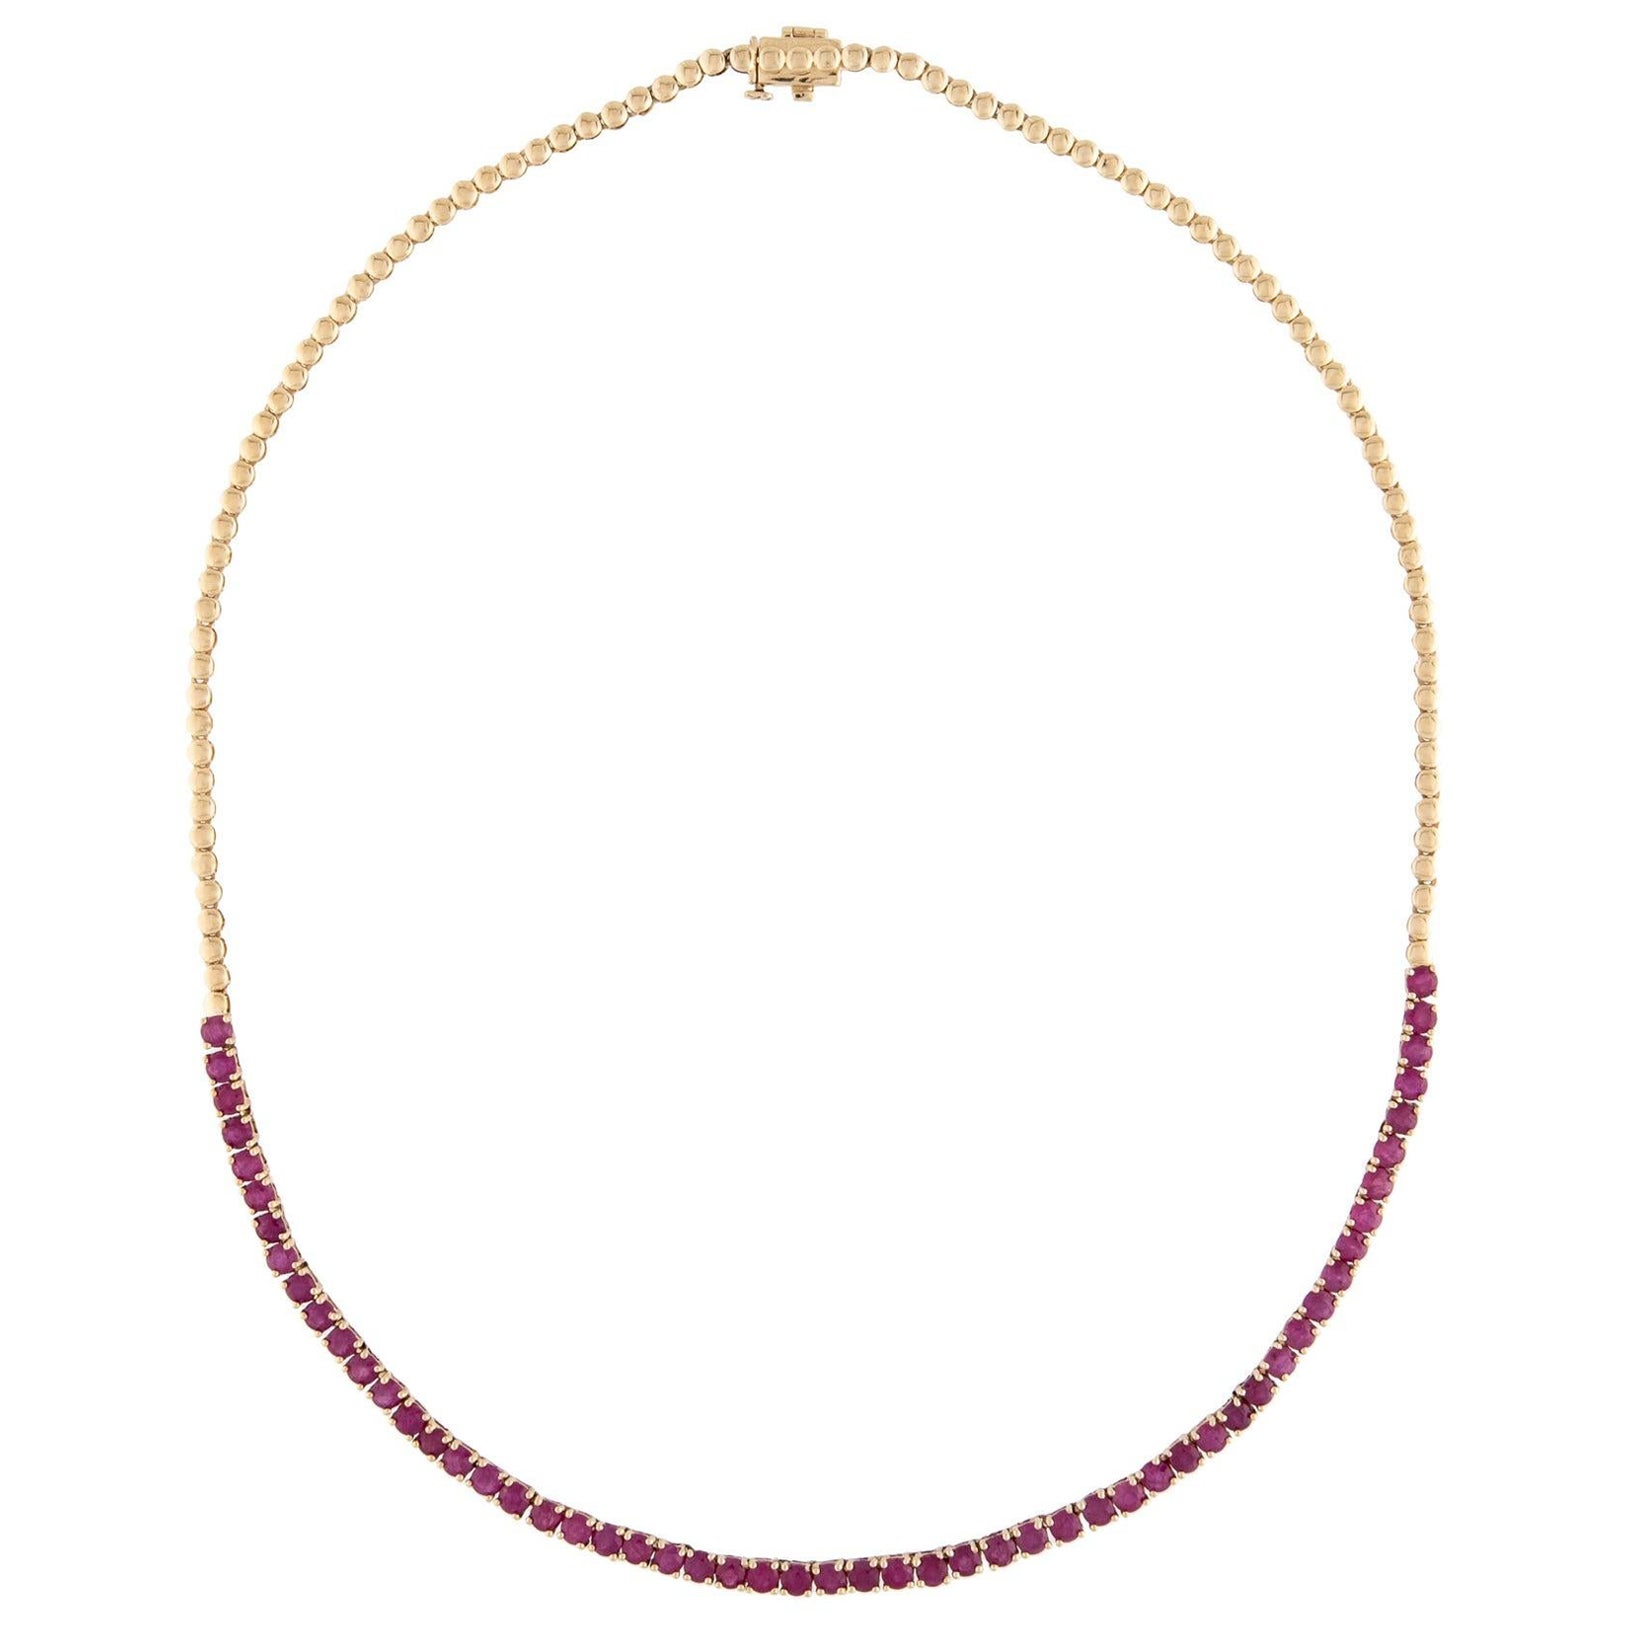 Luxury 14K 10.17ctw Ruby Collar Necklace - Exquisite Gemstone Statement Piece For Sale